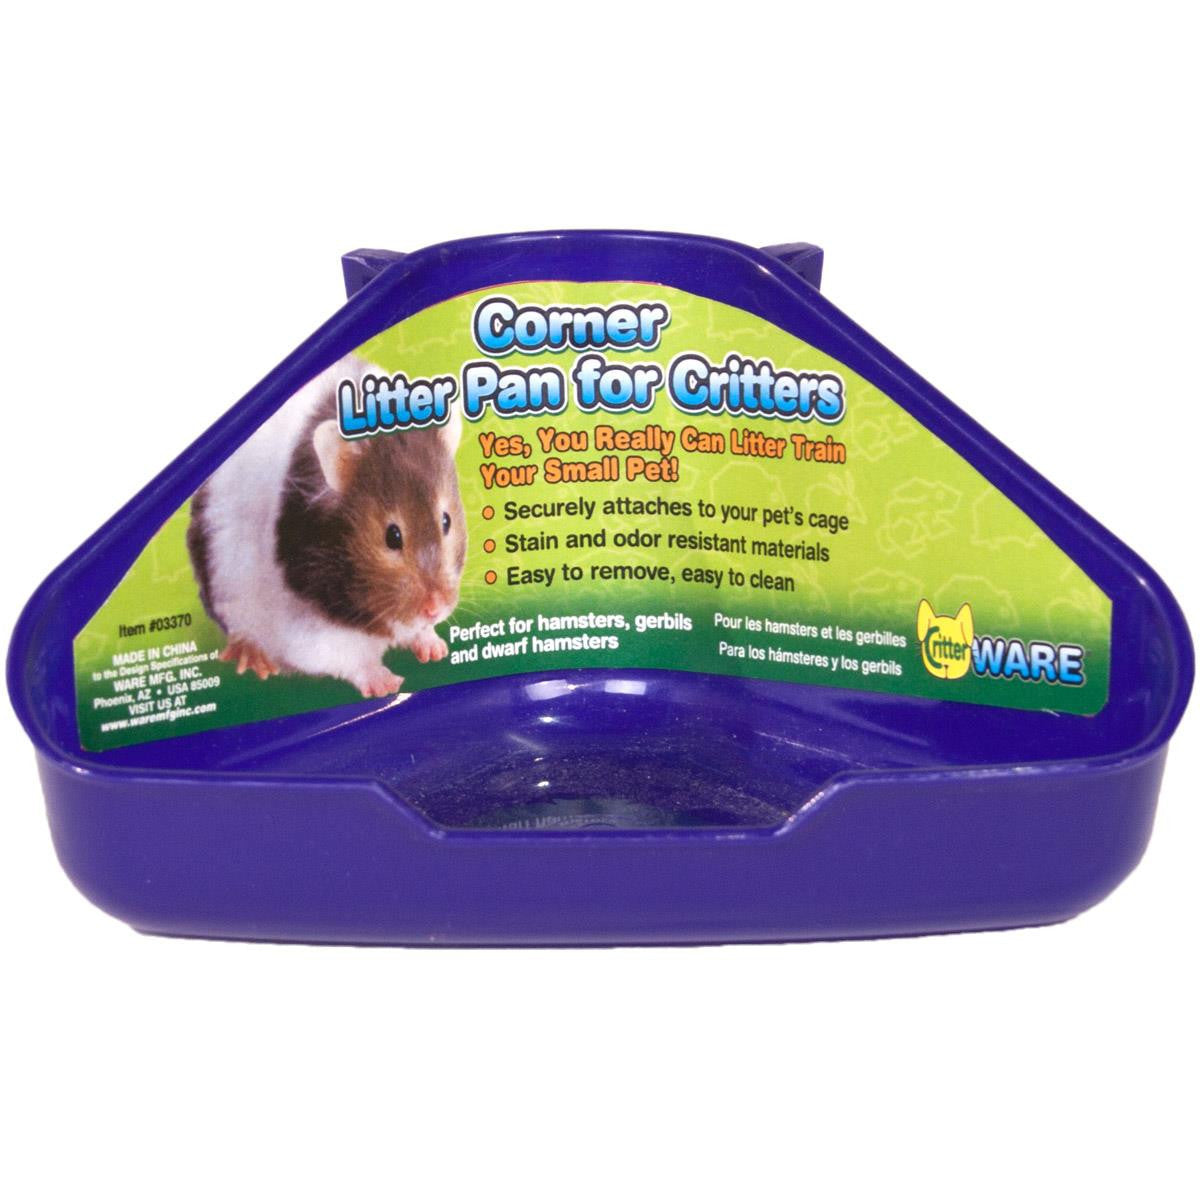 Ware Corner Litter Pan for Critters 791611033708